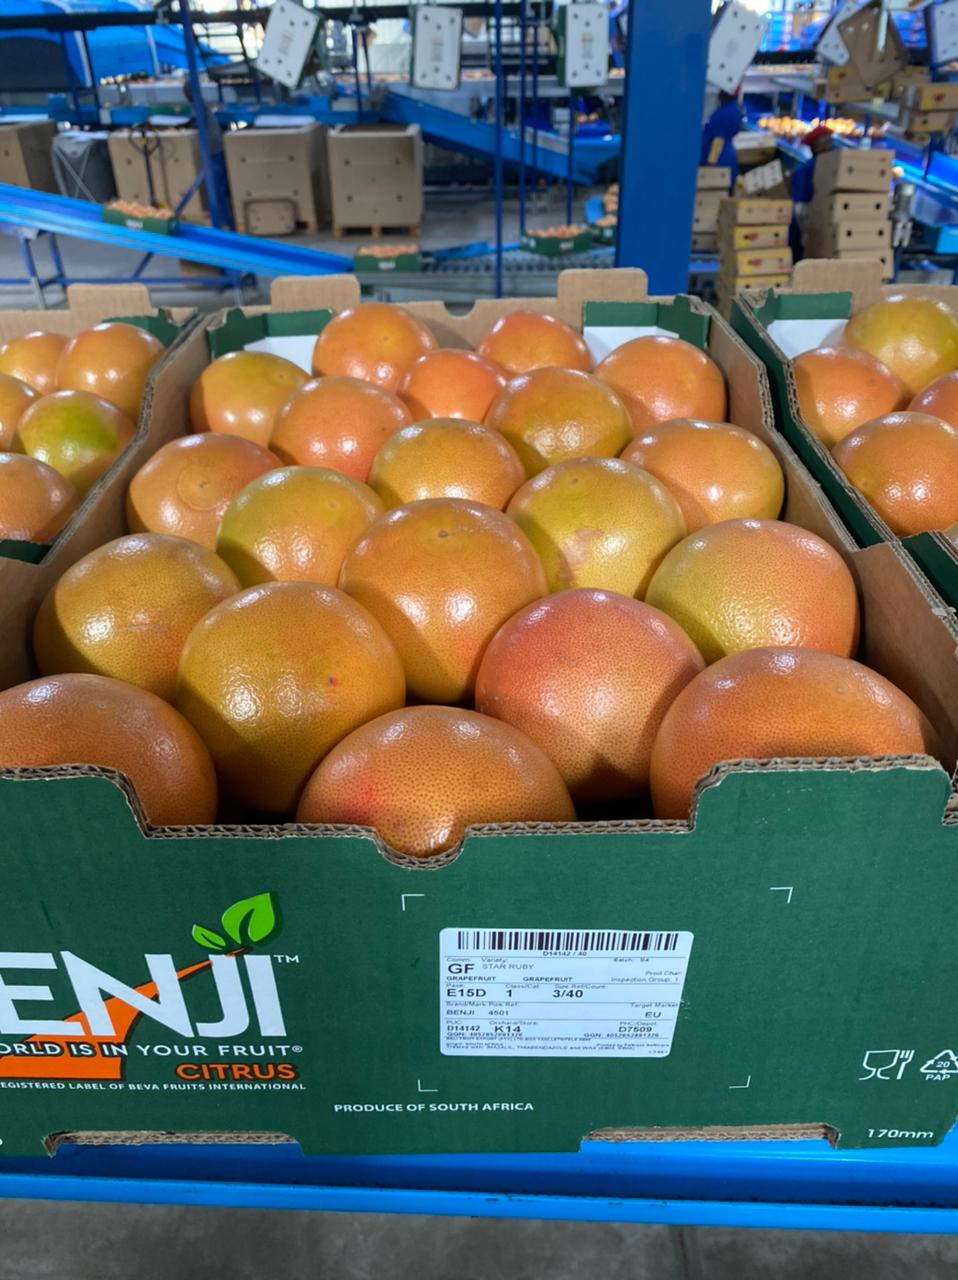 New shipment of Star Ruby grapefruit in South Africa - Beva Fruits International (BFI)